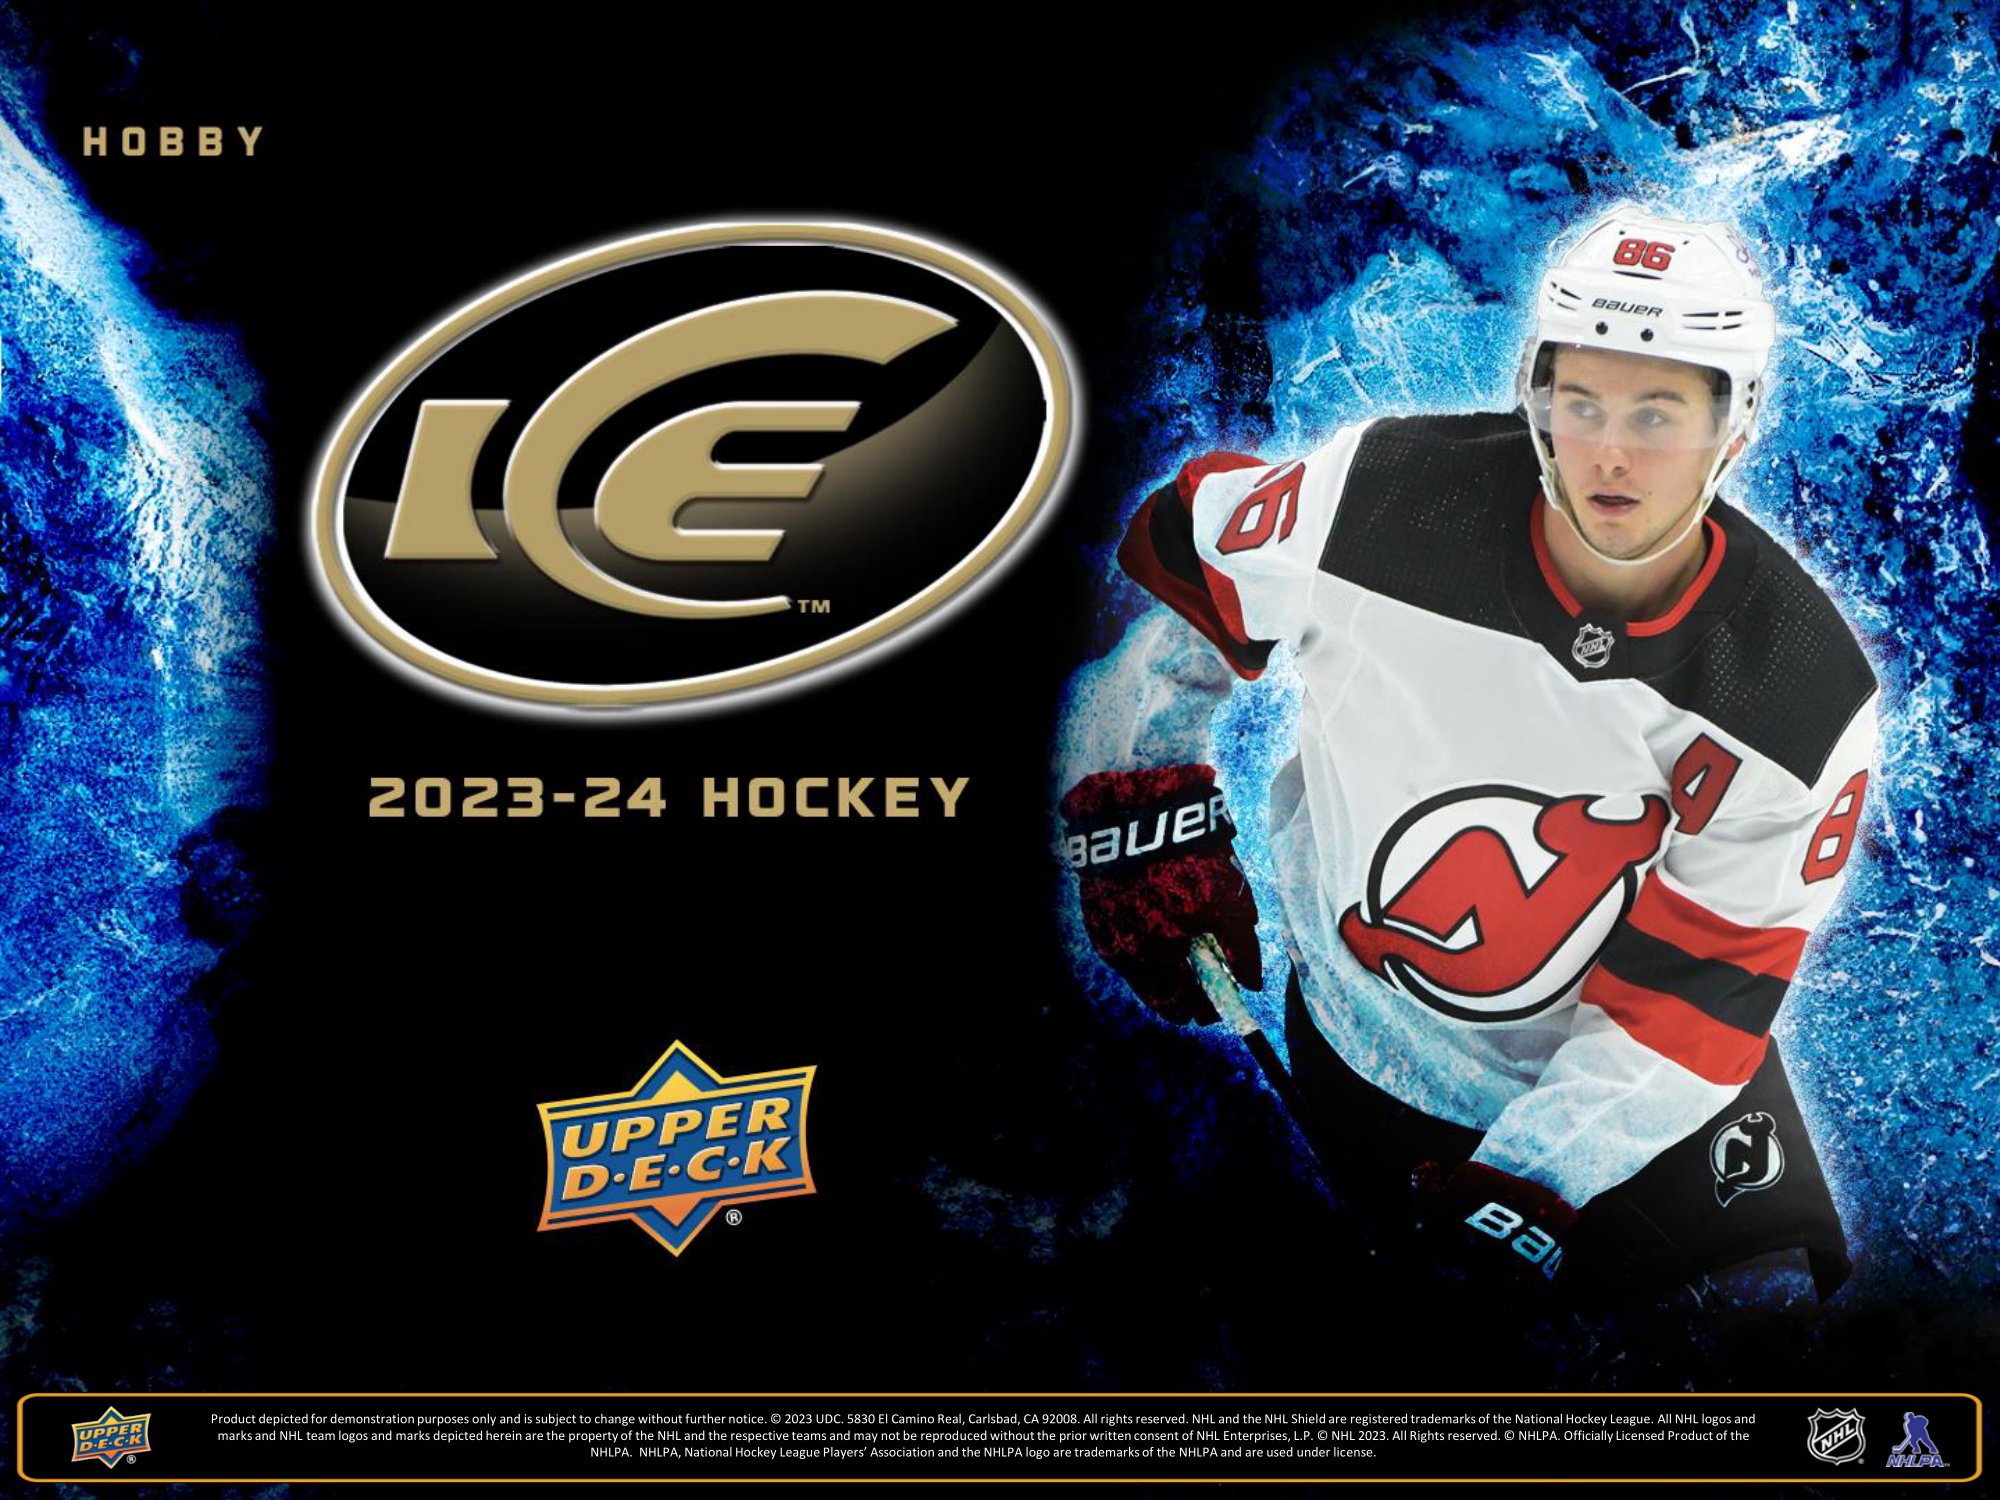 NHL 2023-24 UPPER DECK “ICE” HOCKEY【製品情報】 | Trading Card Journal